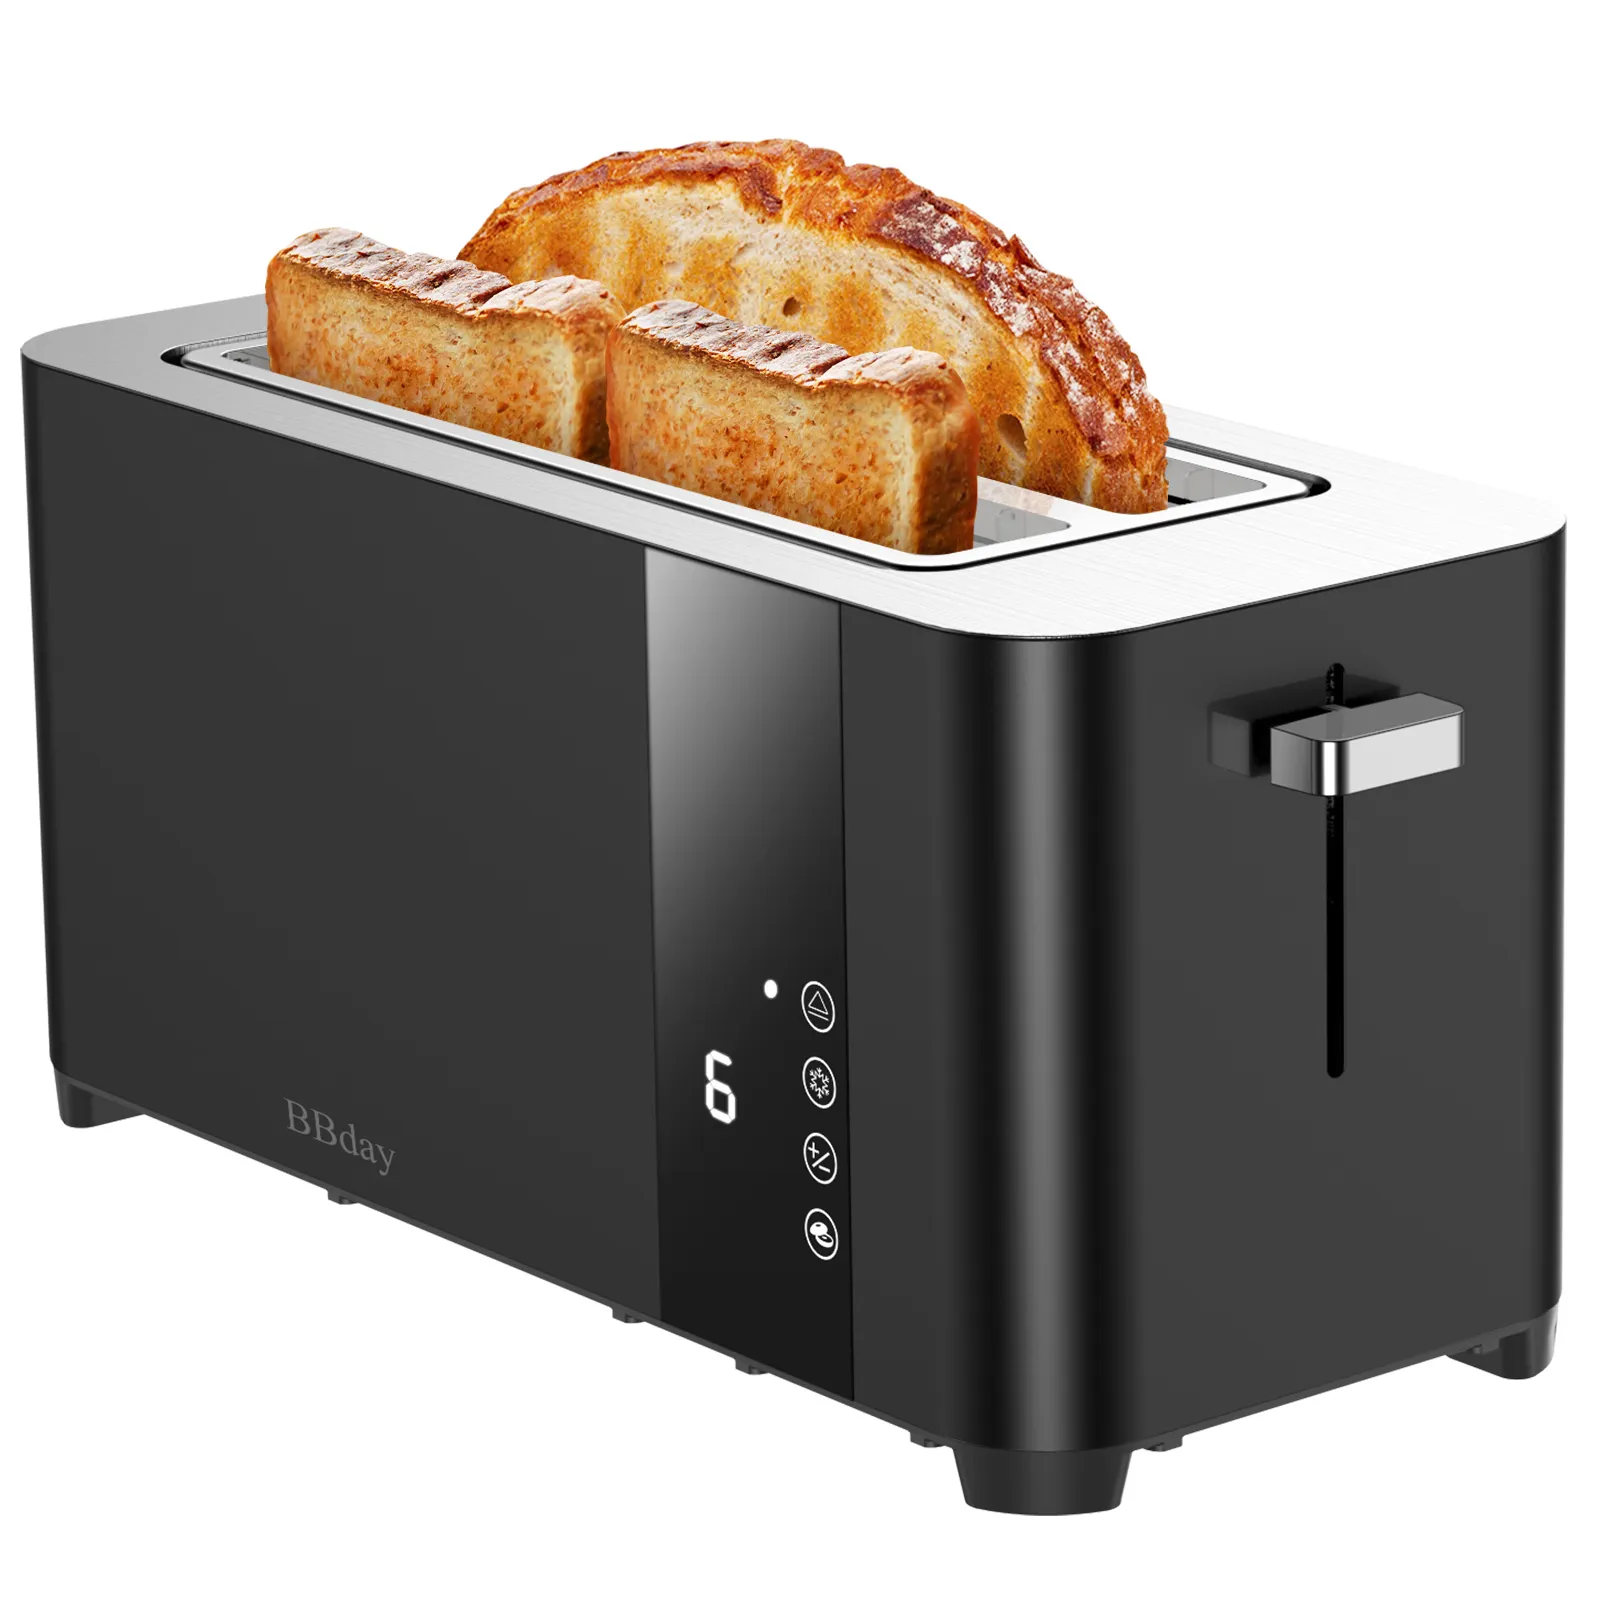 Smart LED Touchscreen Long Slot Toaster Factory OEM/ODM, Household Use Stainless Steel 4 Slice Breakfast Bread Toaster